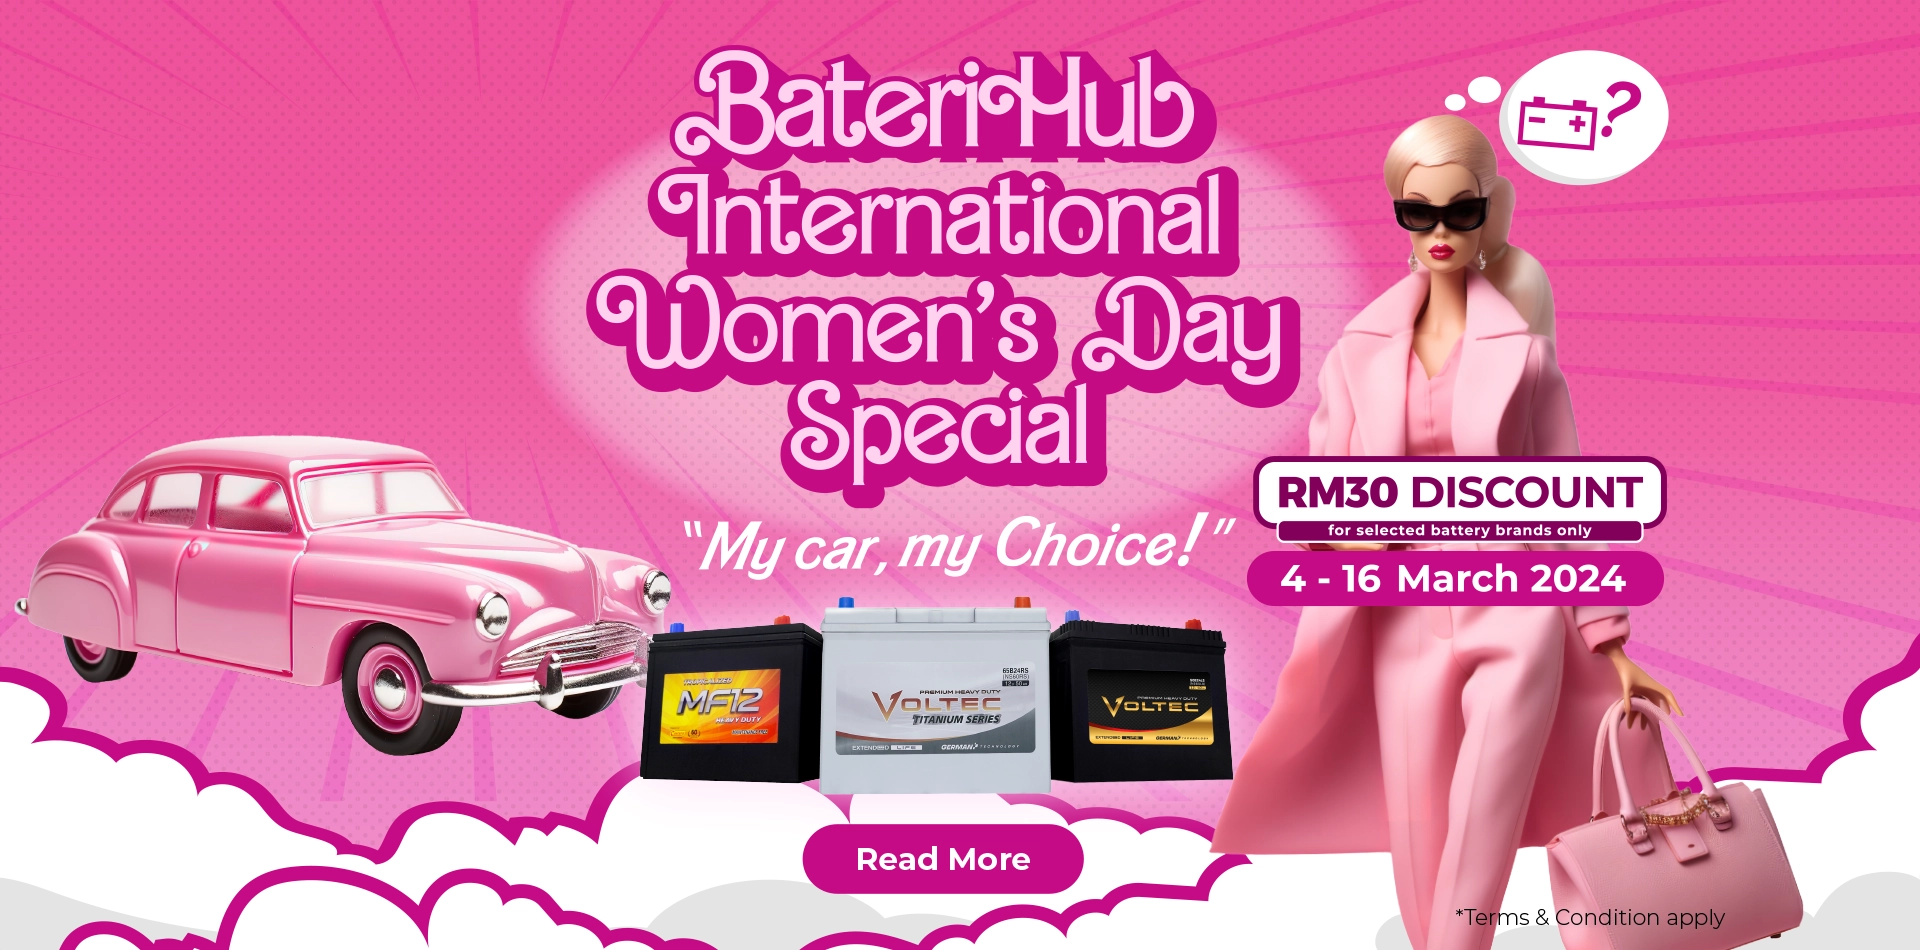 BateriHub-International Women's Day Campaign